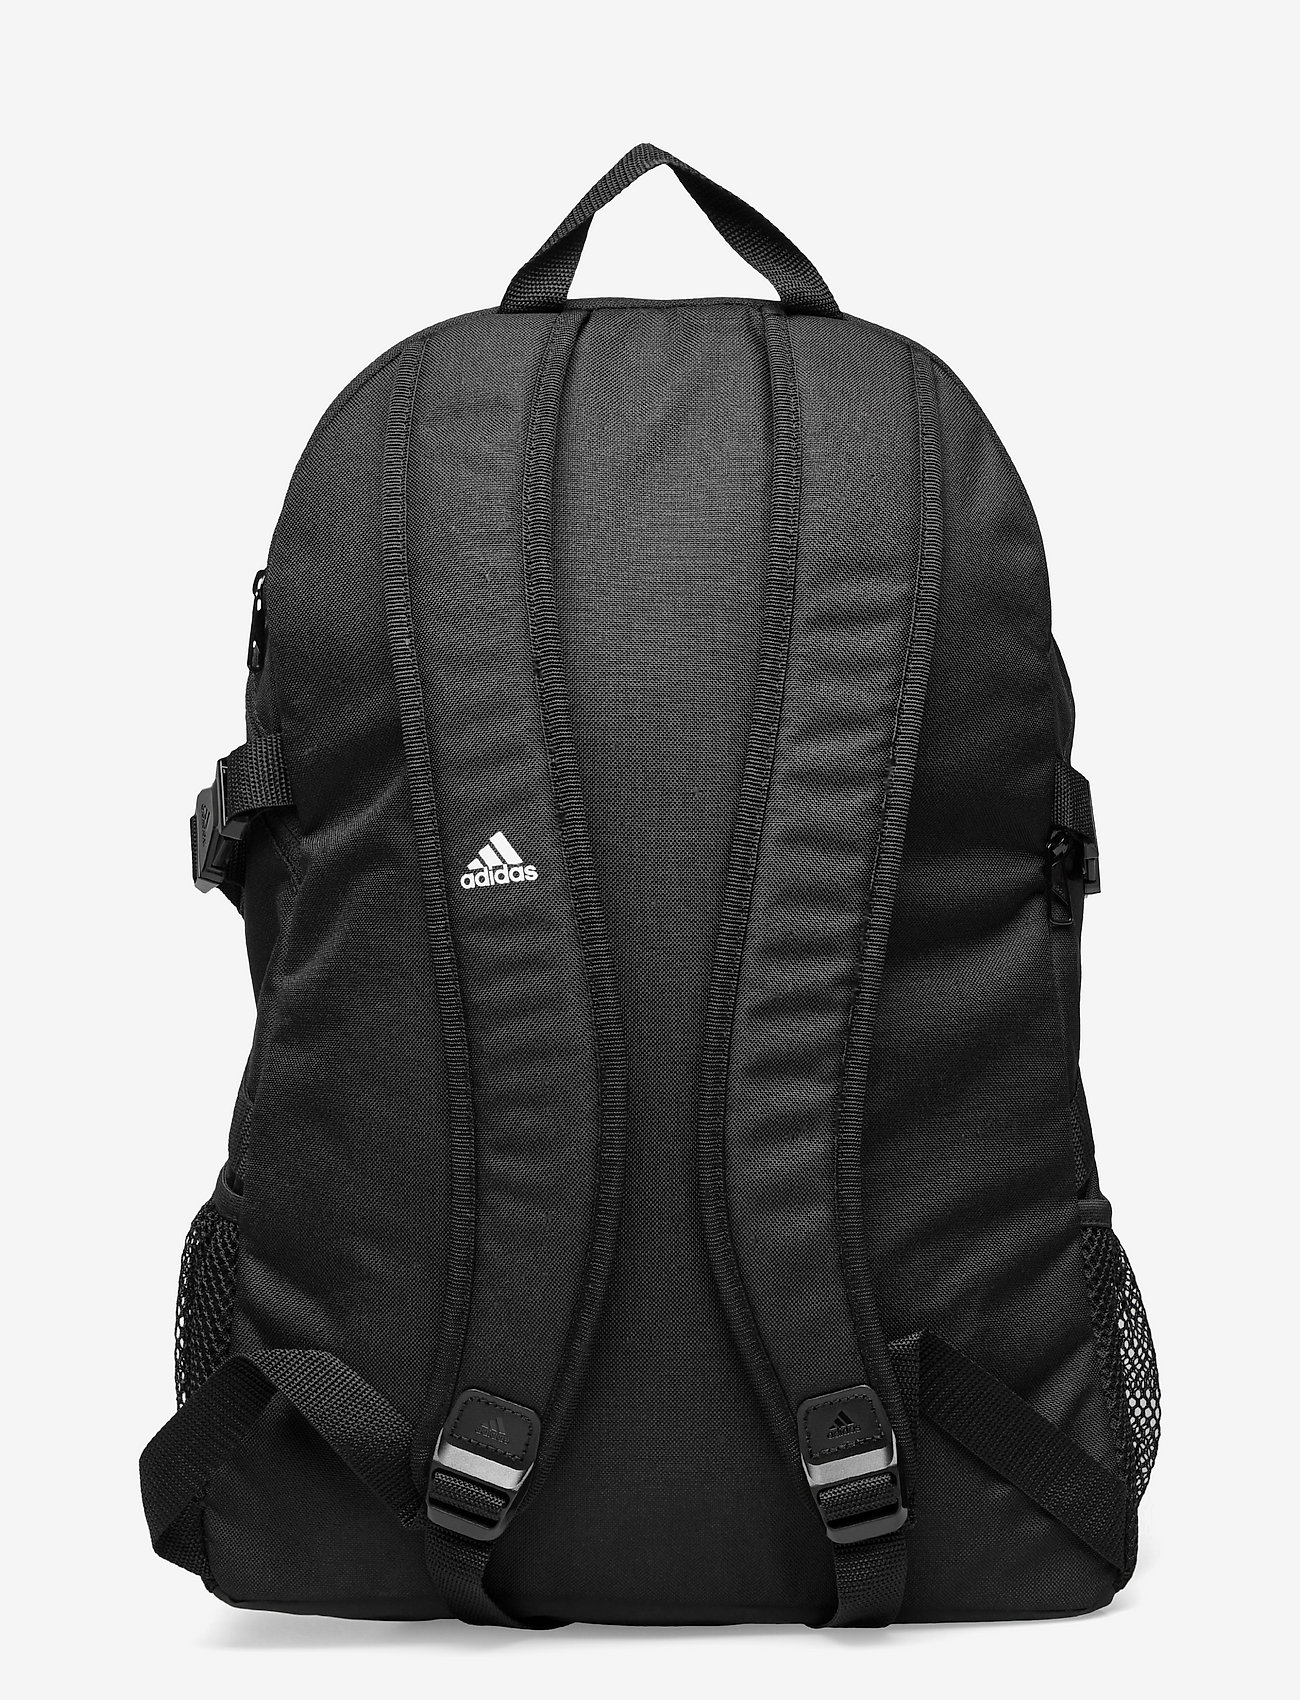 adidas Performance - Power 5 Backpack - black/white - 1